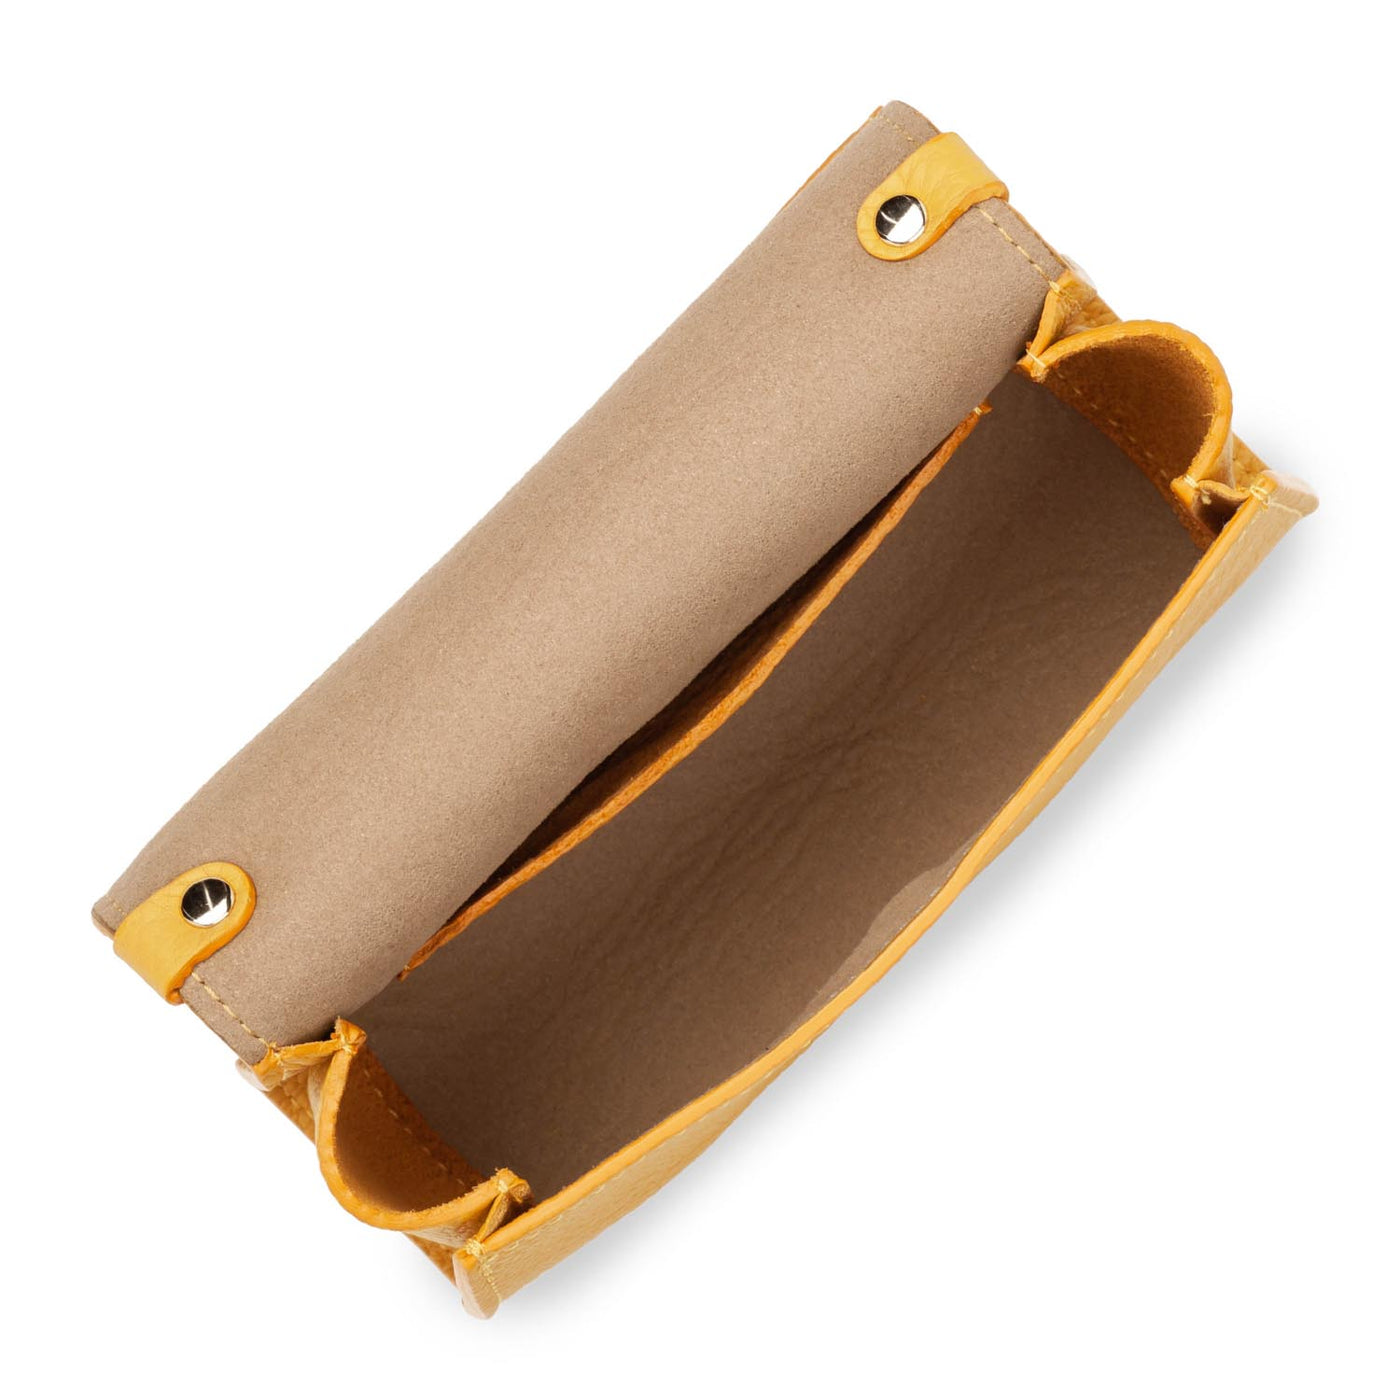 Luxury monogram Bee mini backpack purse hand bag designer Ribbon Porta –  Shopstudio139